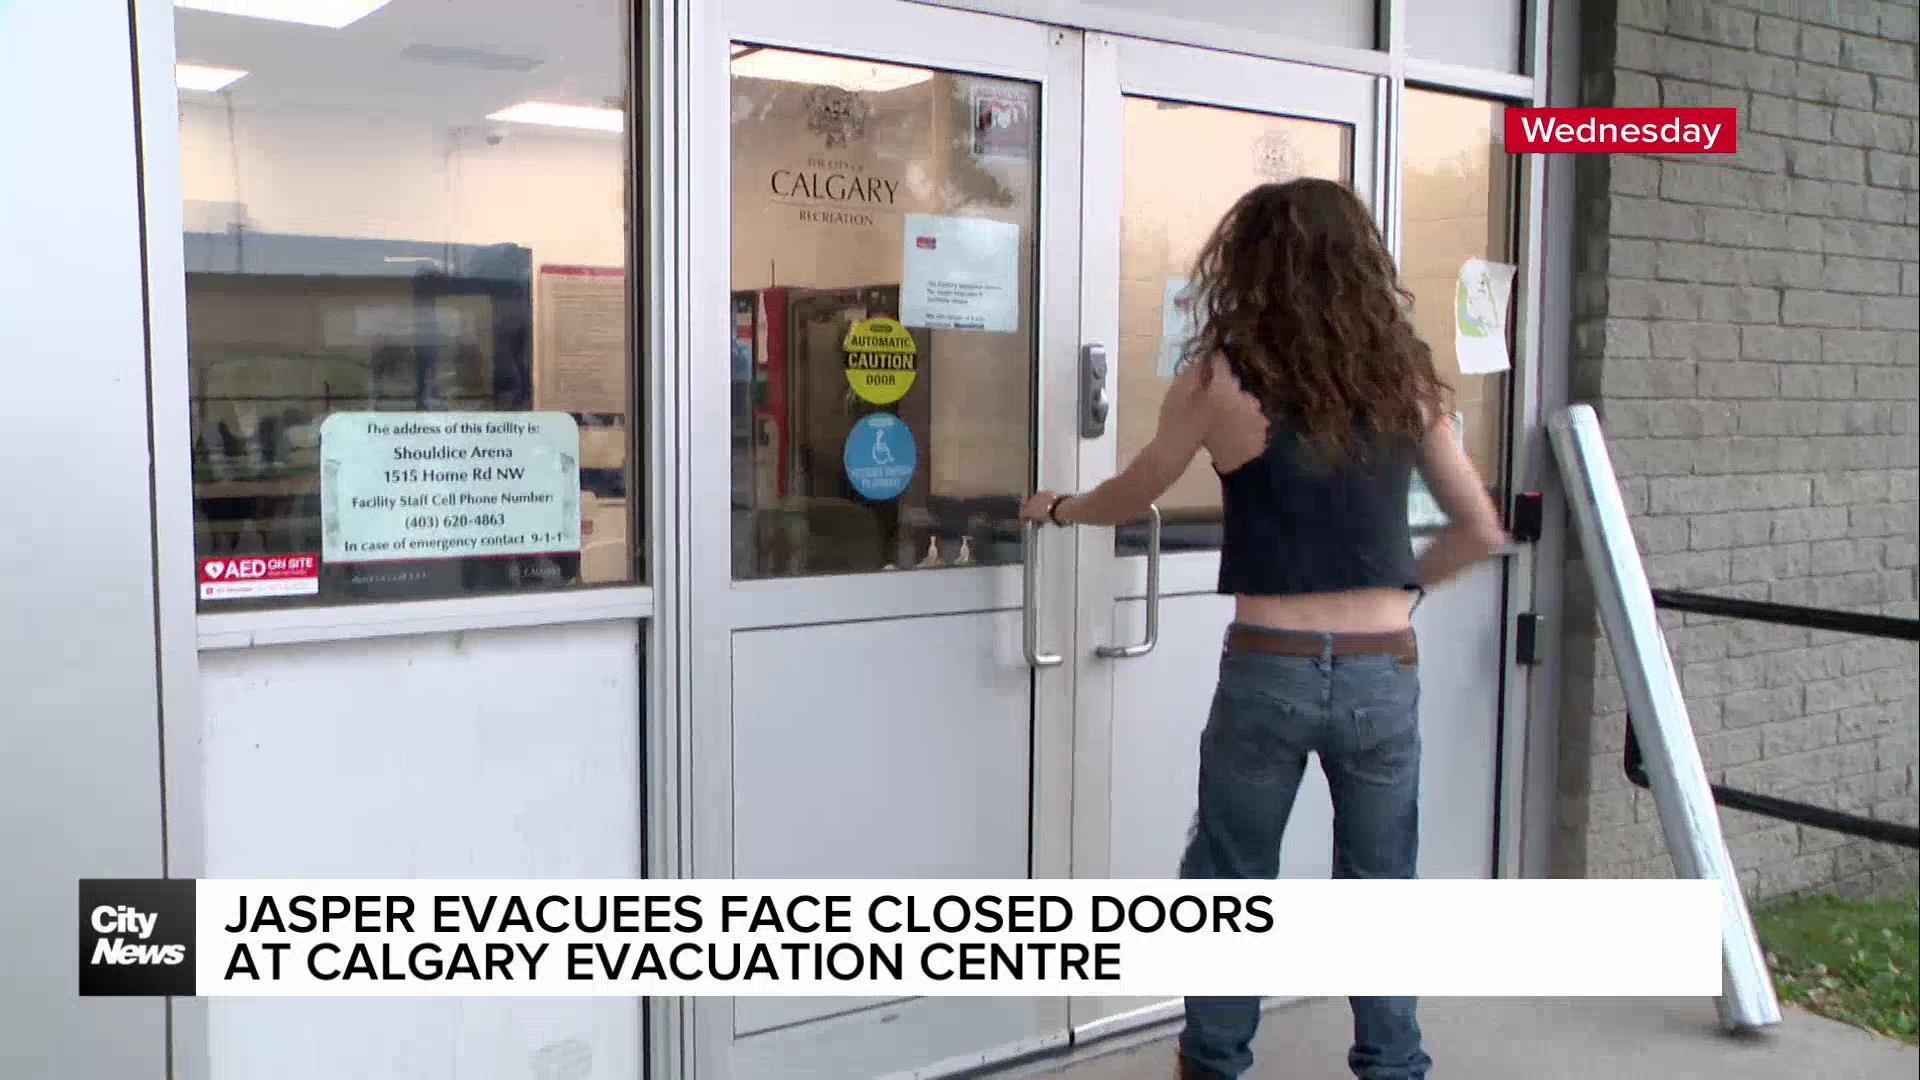 Jasper evacuees face closed doors at Calgary evacuation centre